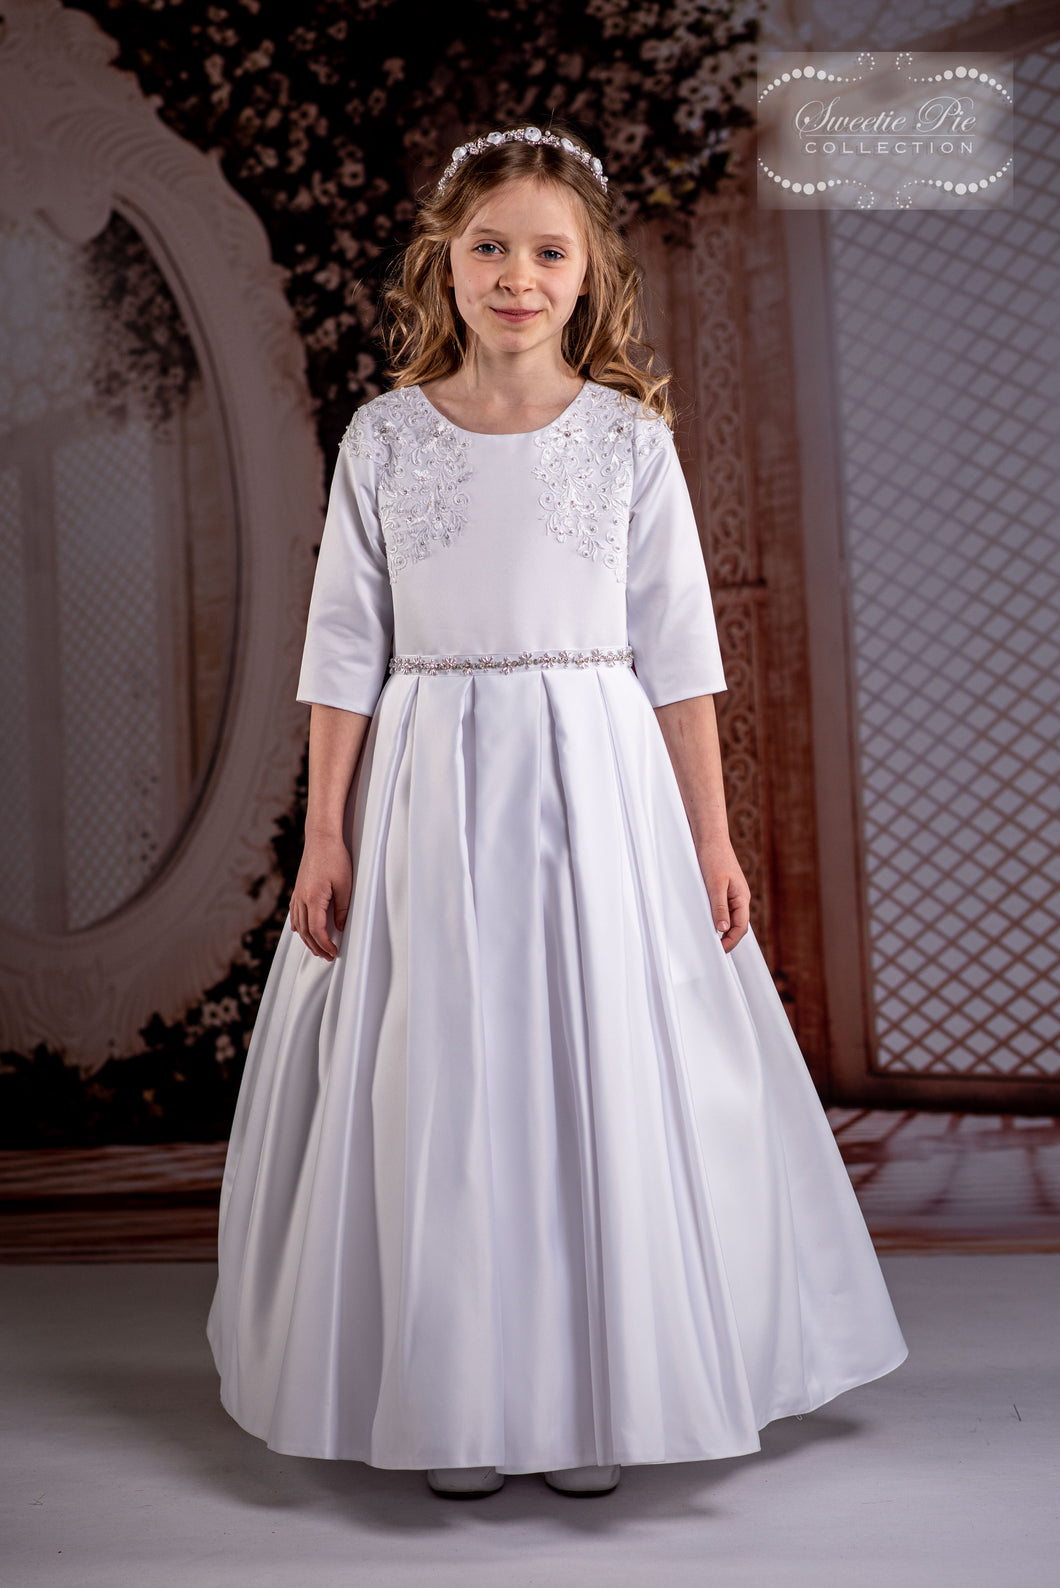 SALE COMMUNION DRESS Sweetie Pie Girls White Communion Dress:- 4076 AGE 7 & 8